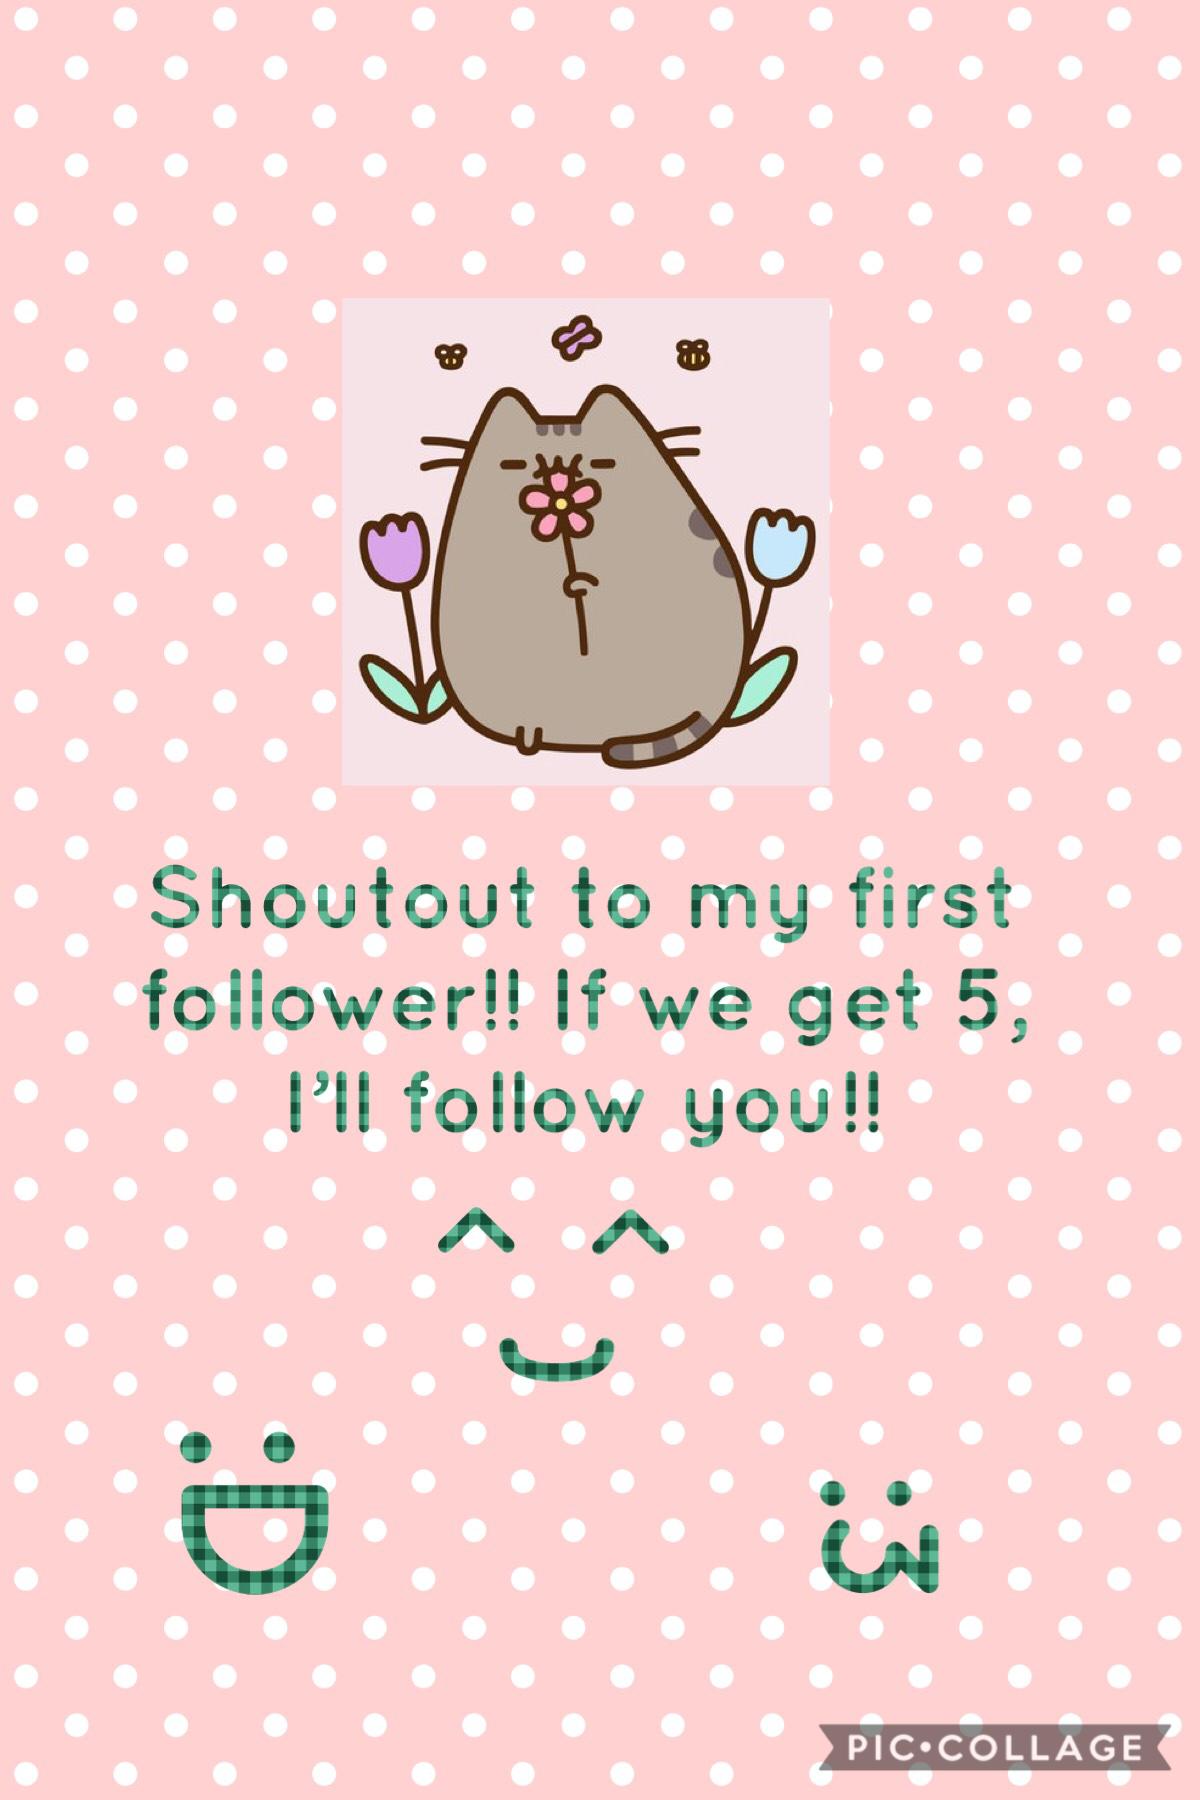 Shoutout to my first follower!!!